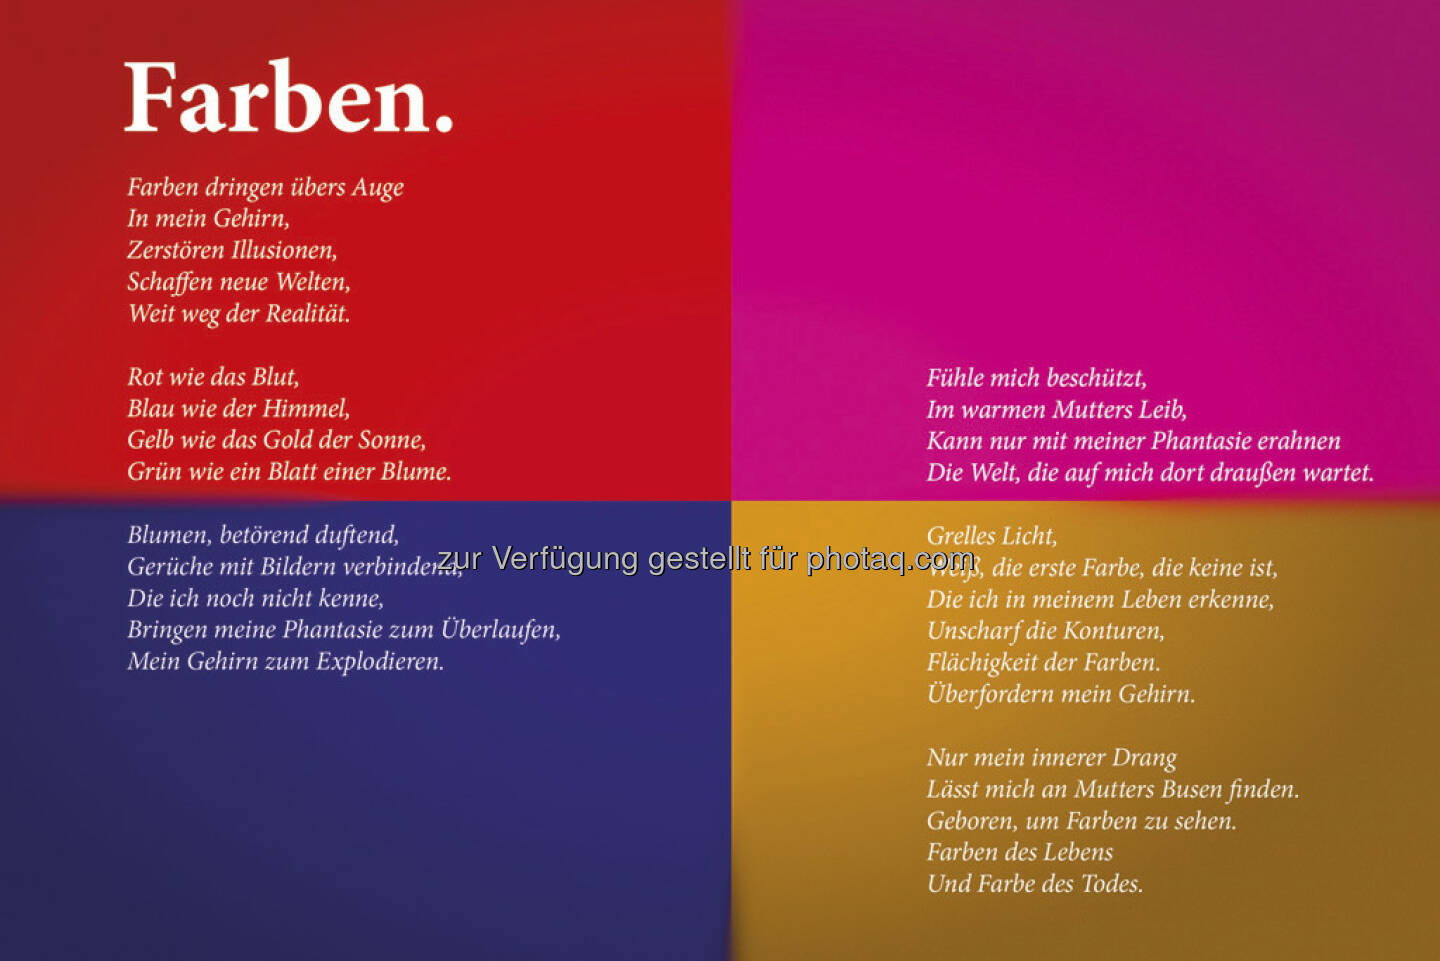 Farben, by Detlef Löffler, http://loefflerpix.com/